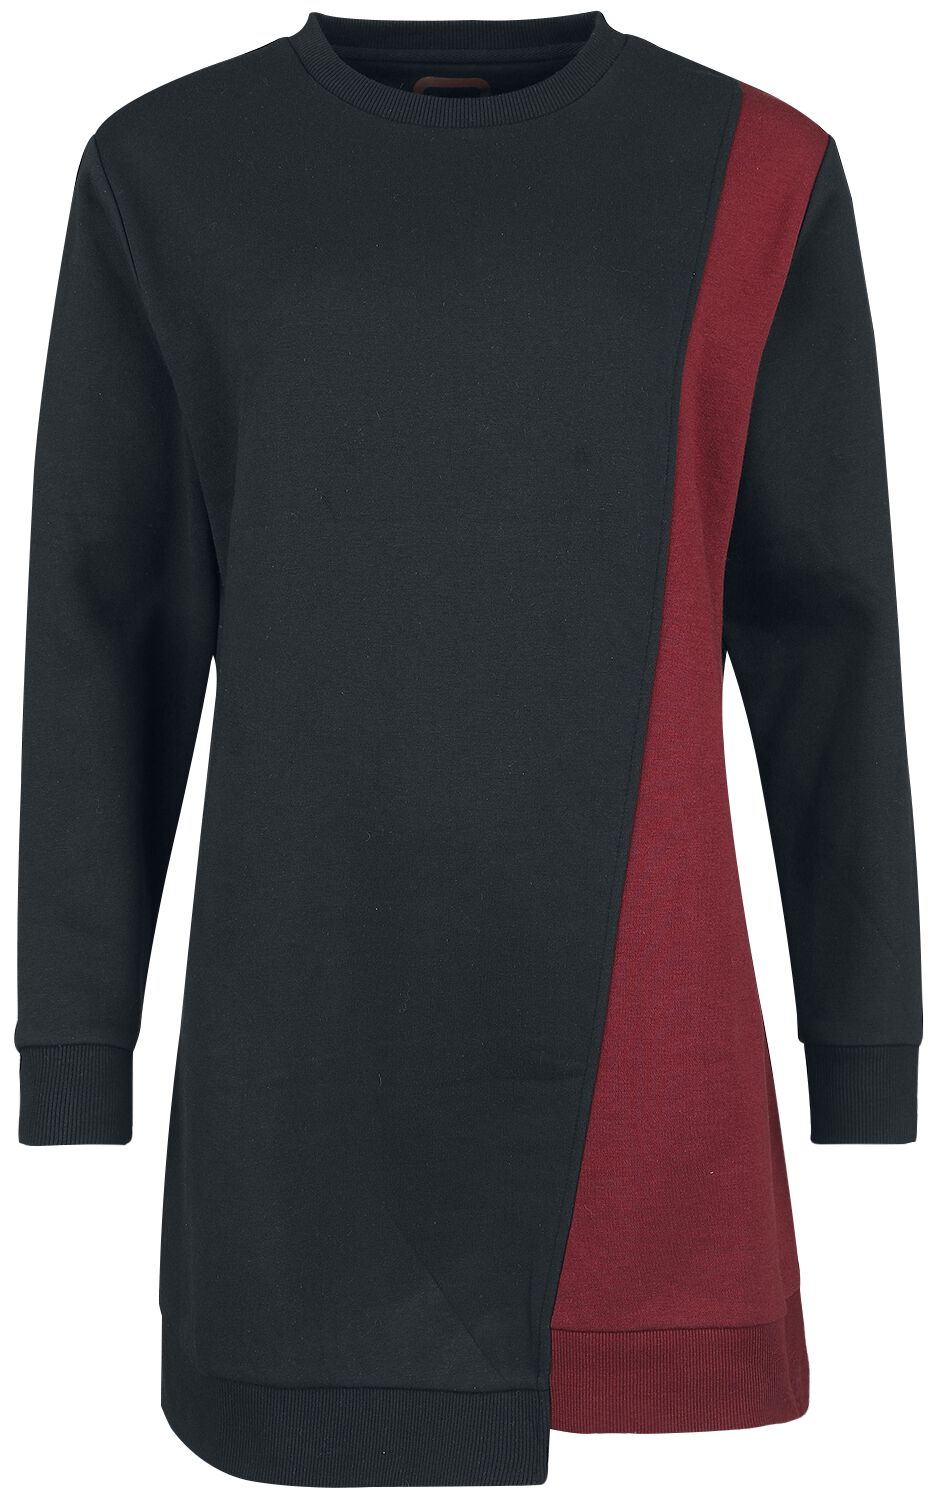 RED by EMP Sweatshirt Dress with asymmetrical Cut Kurzes Kleid schwarz dunkelrot in M